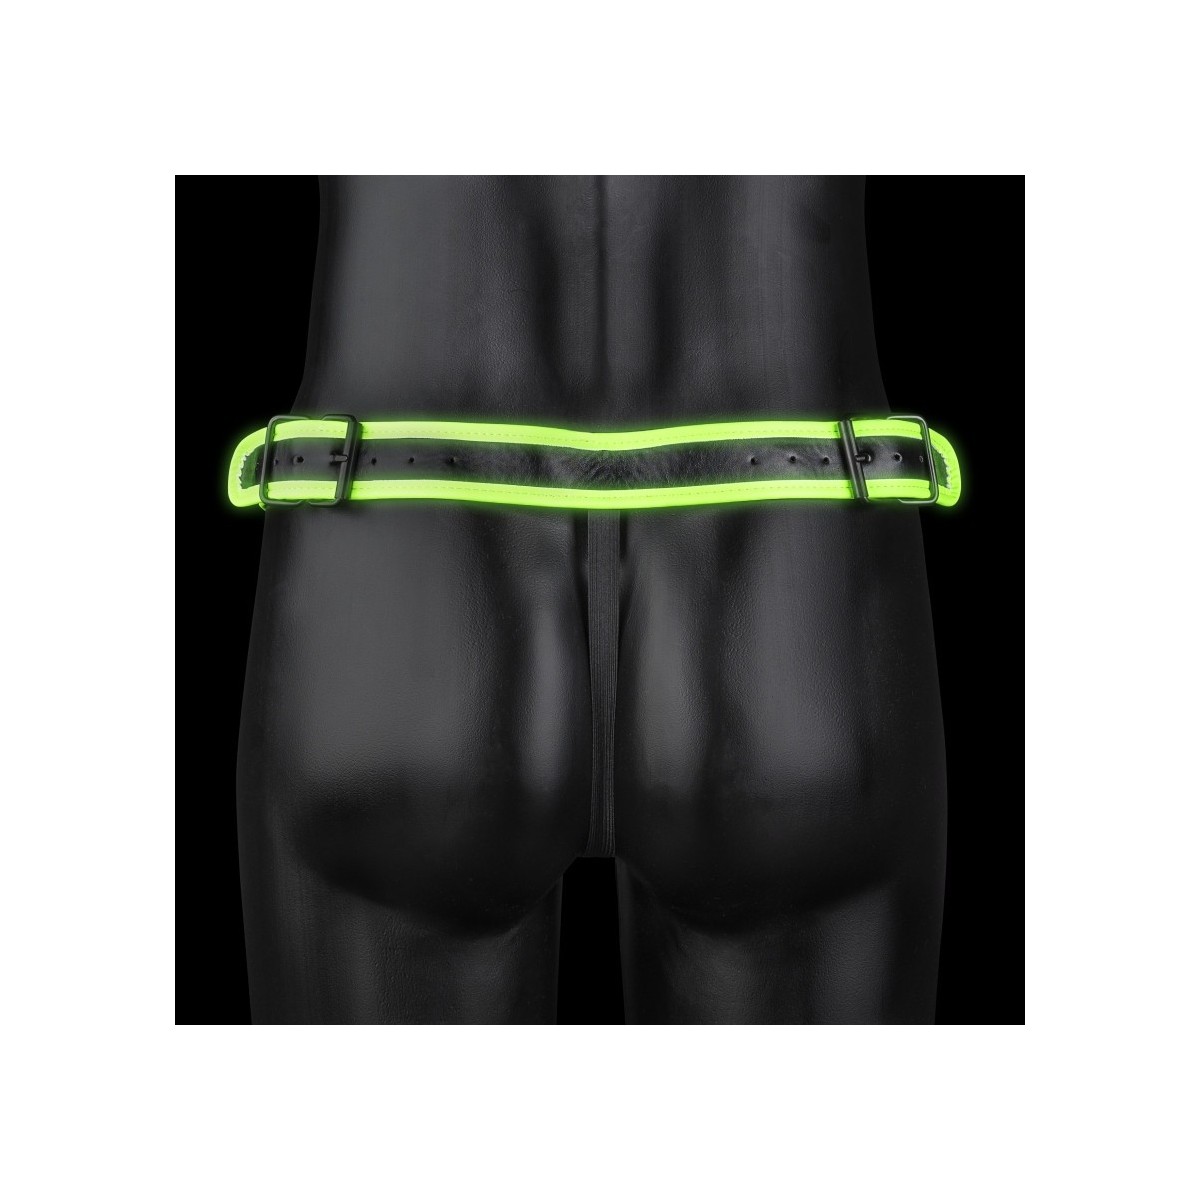 Perizoma uomo Striped Jock Strap - GitD - Neon Green/Black